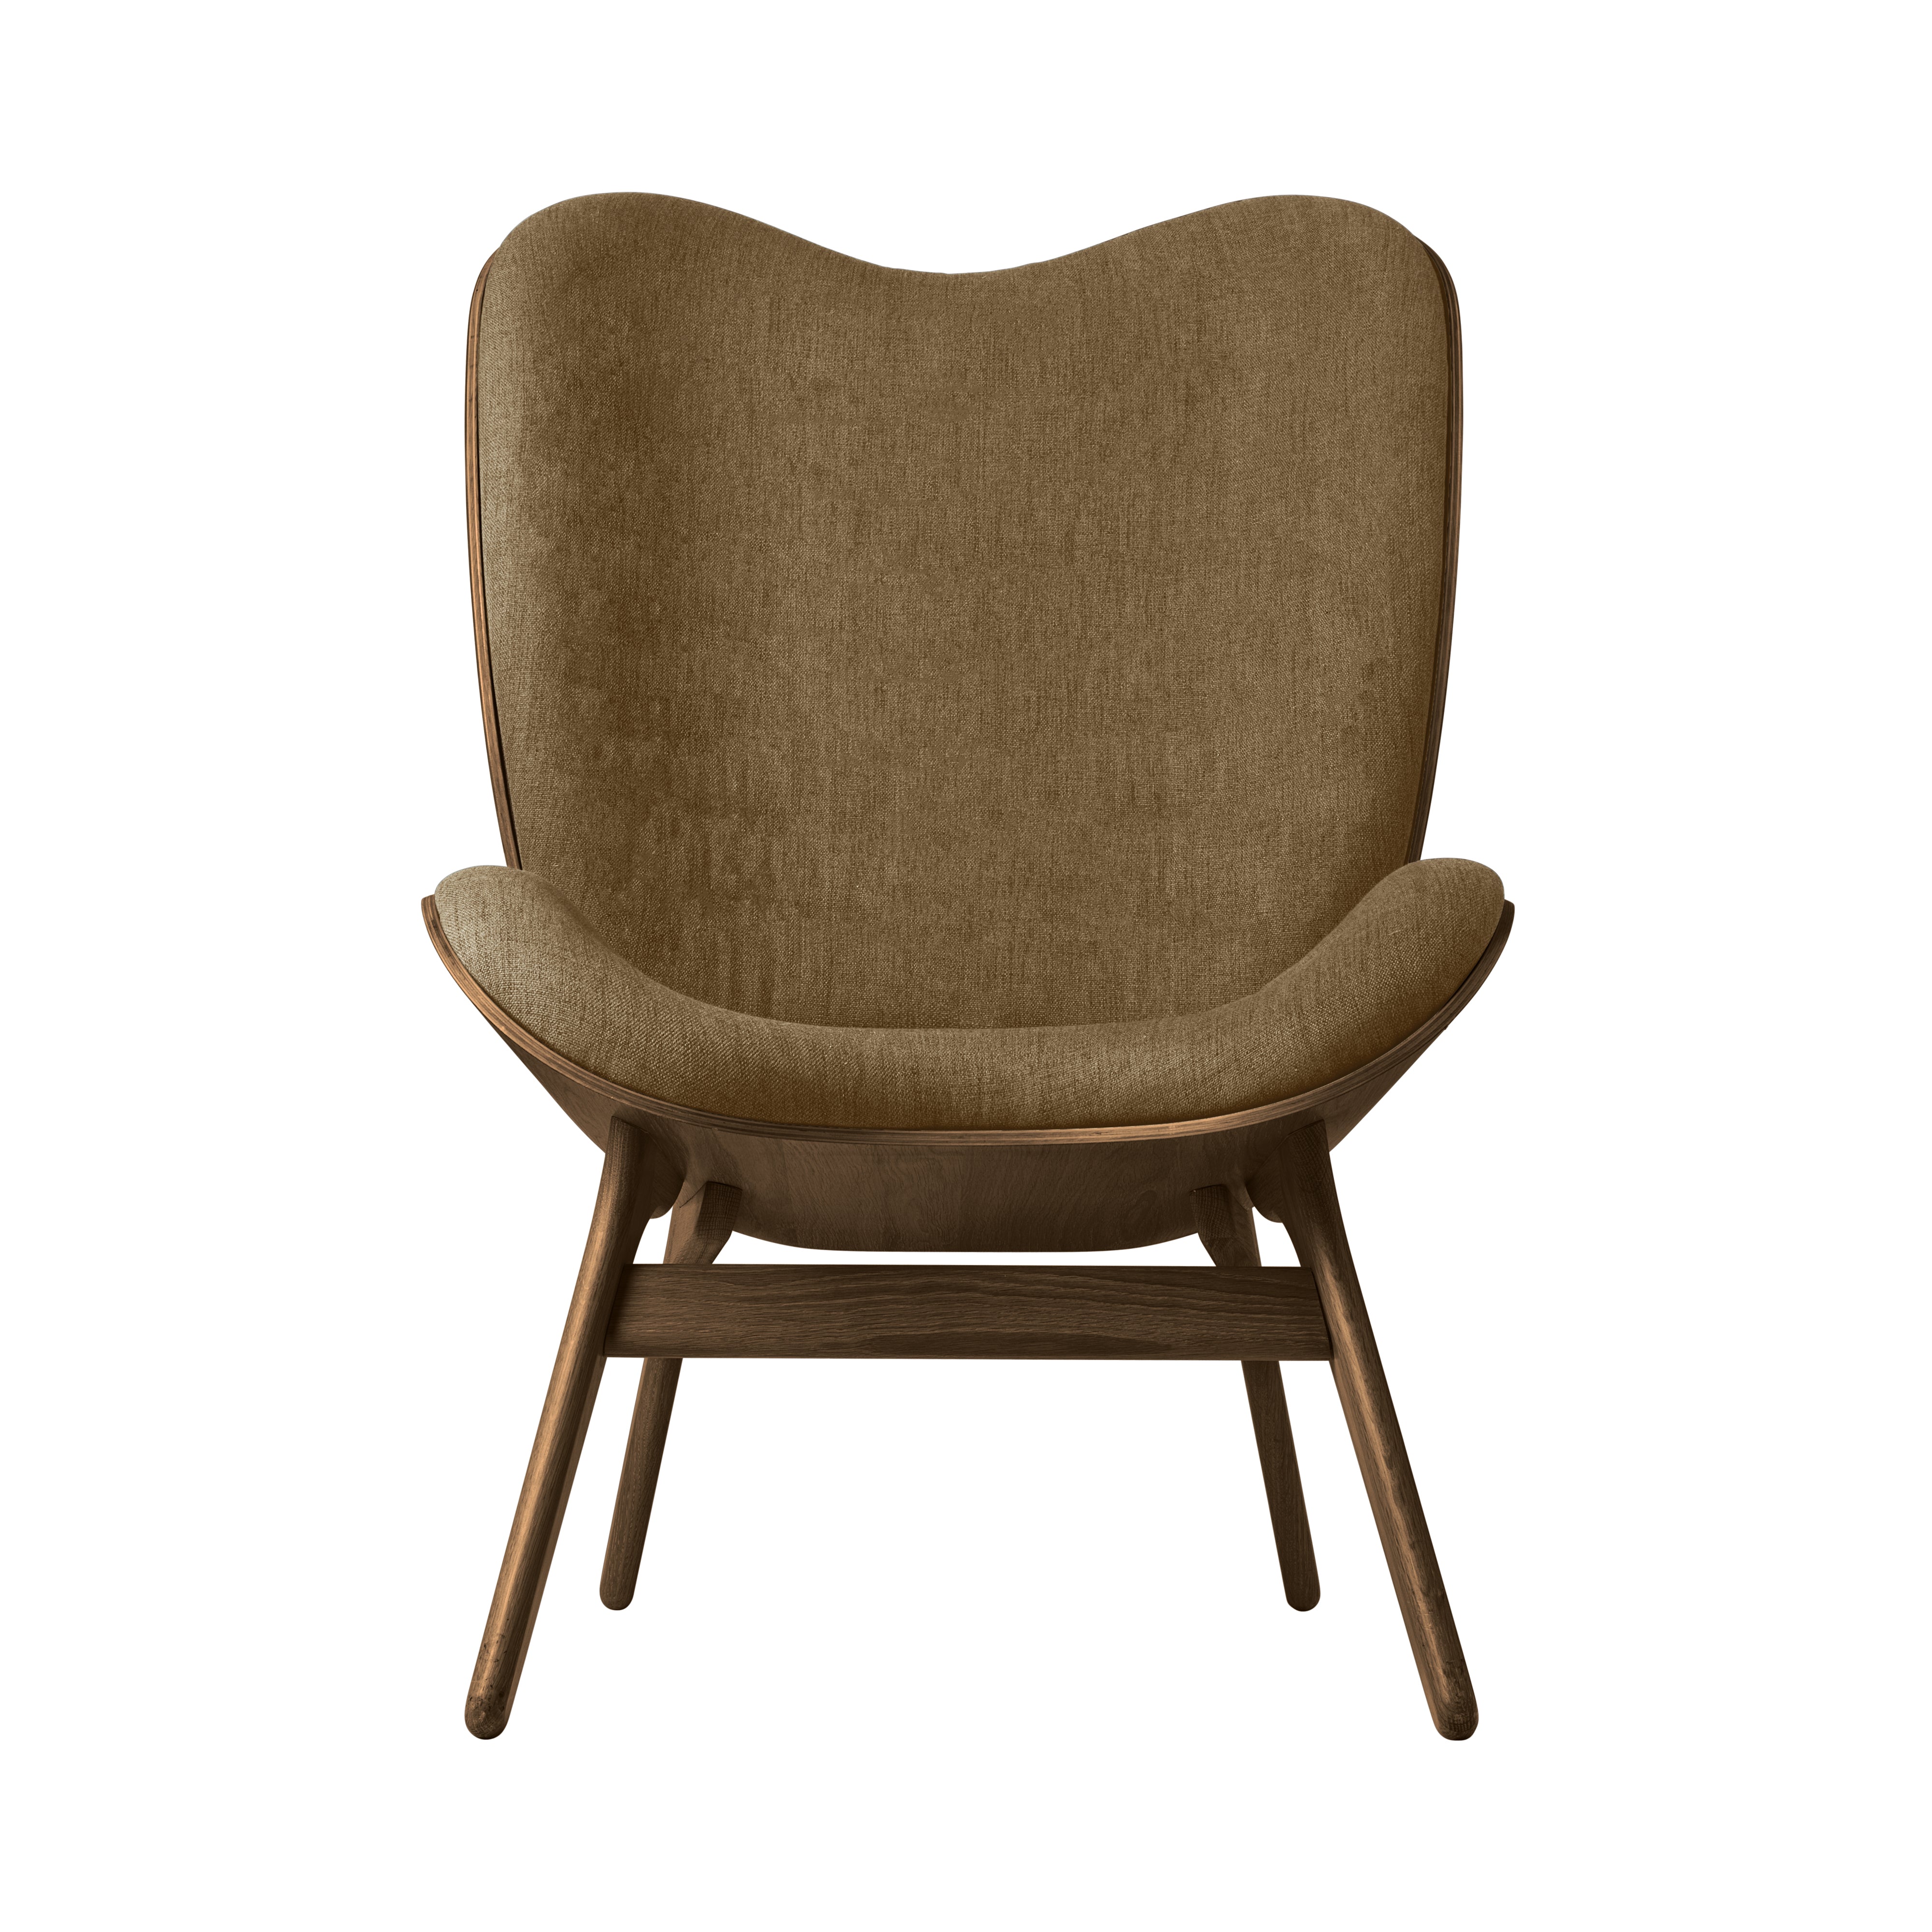 A Conversation Piece Lounge Chair: Tall + Dark Oak + Sugar Brown